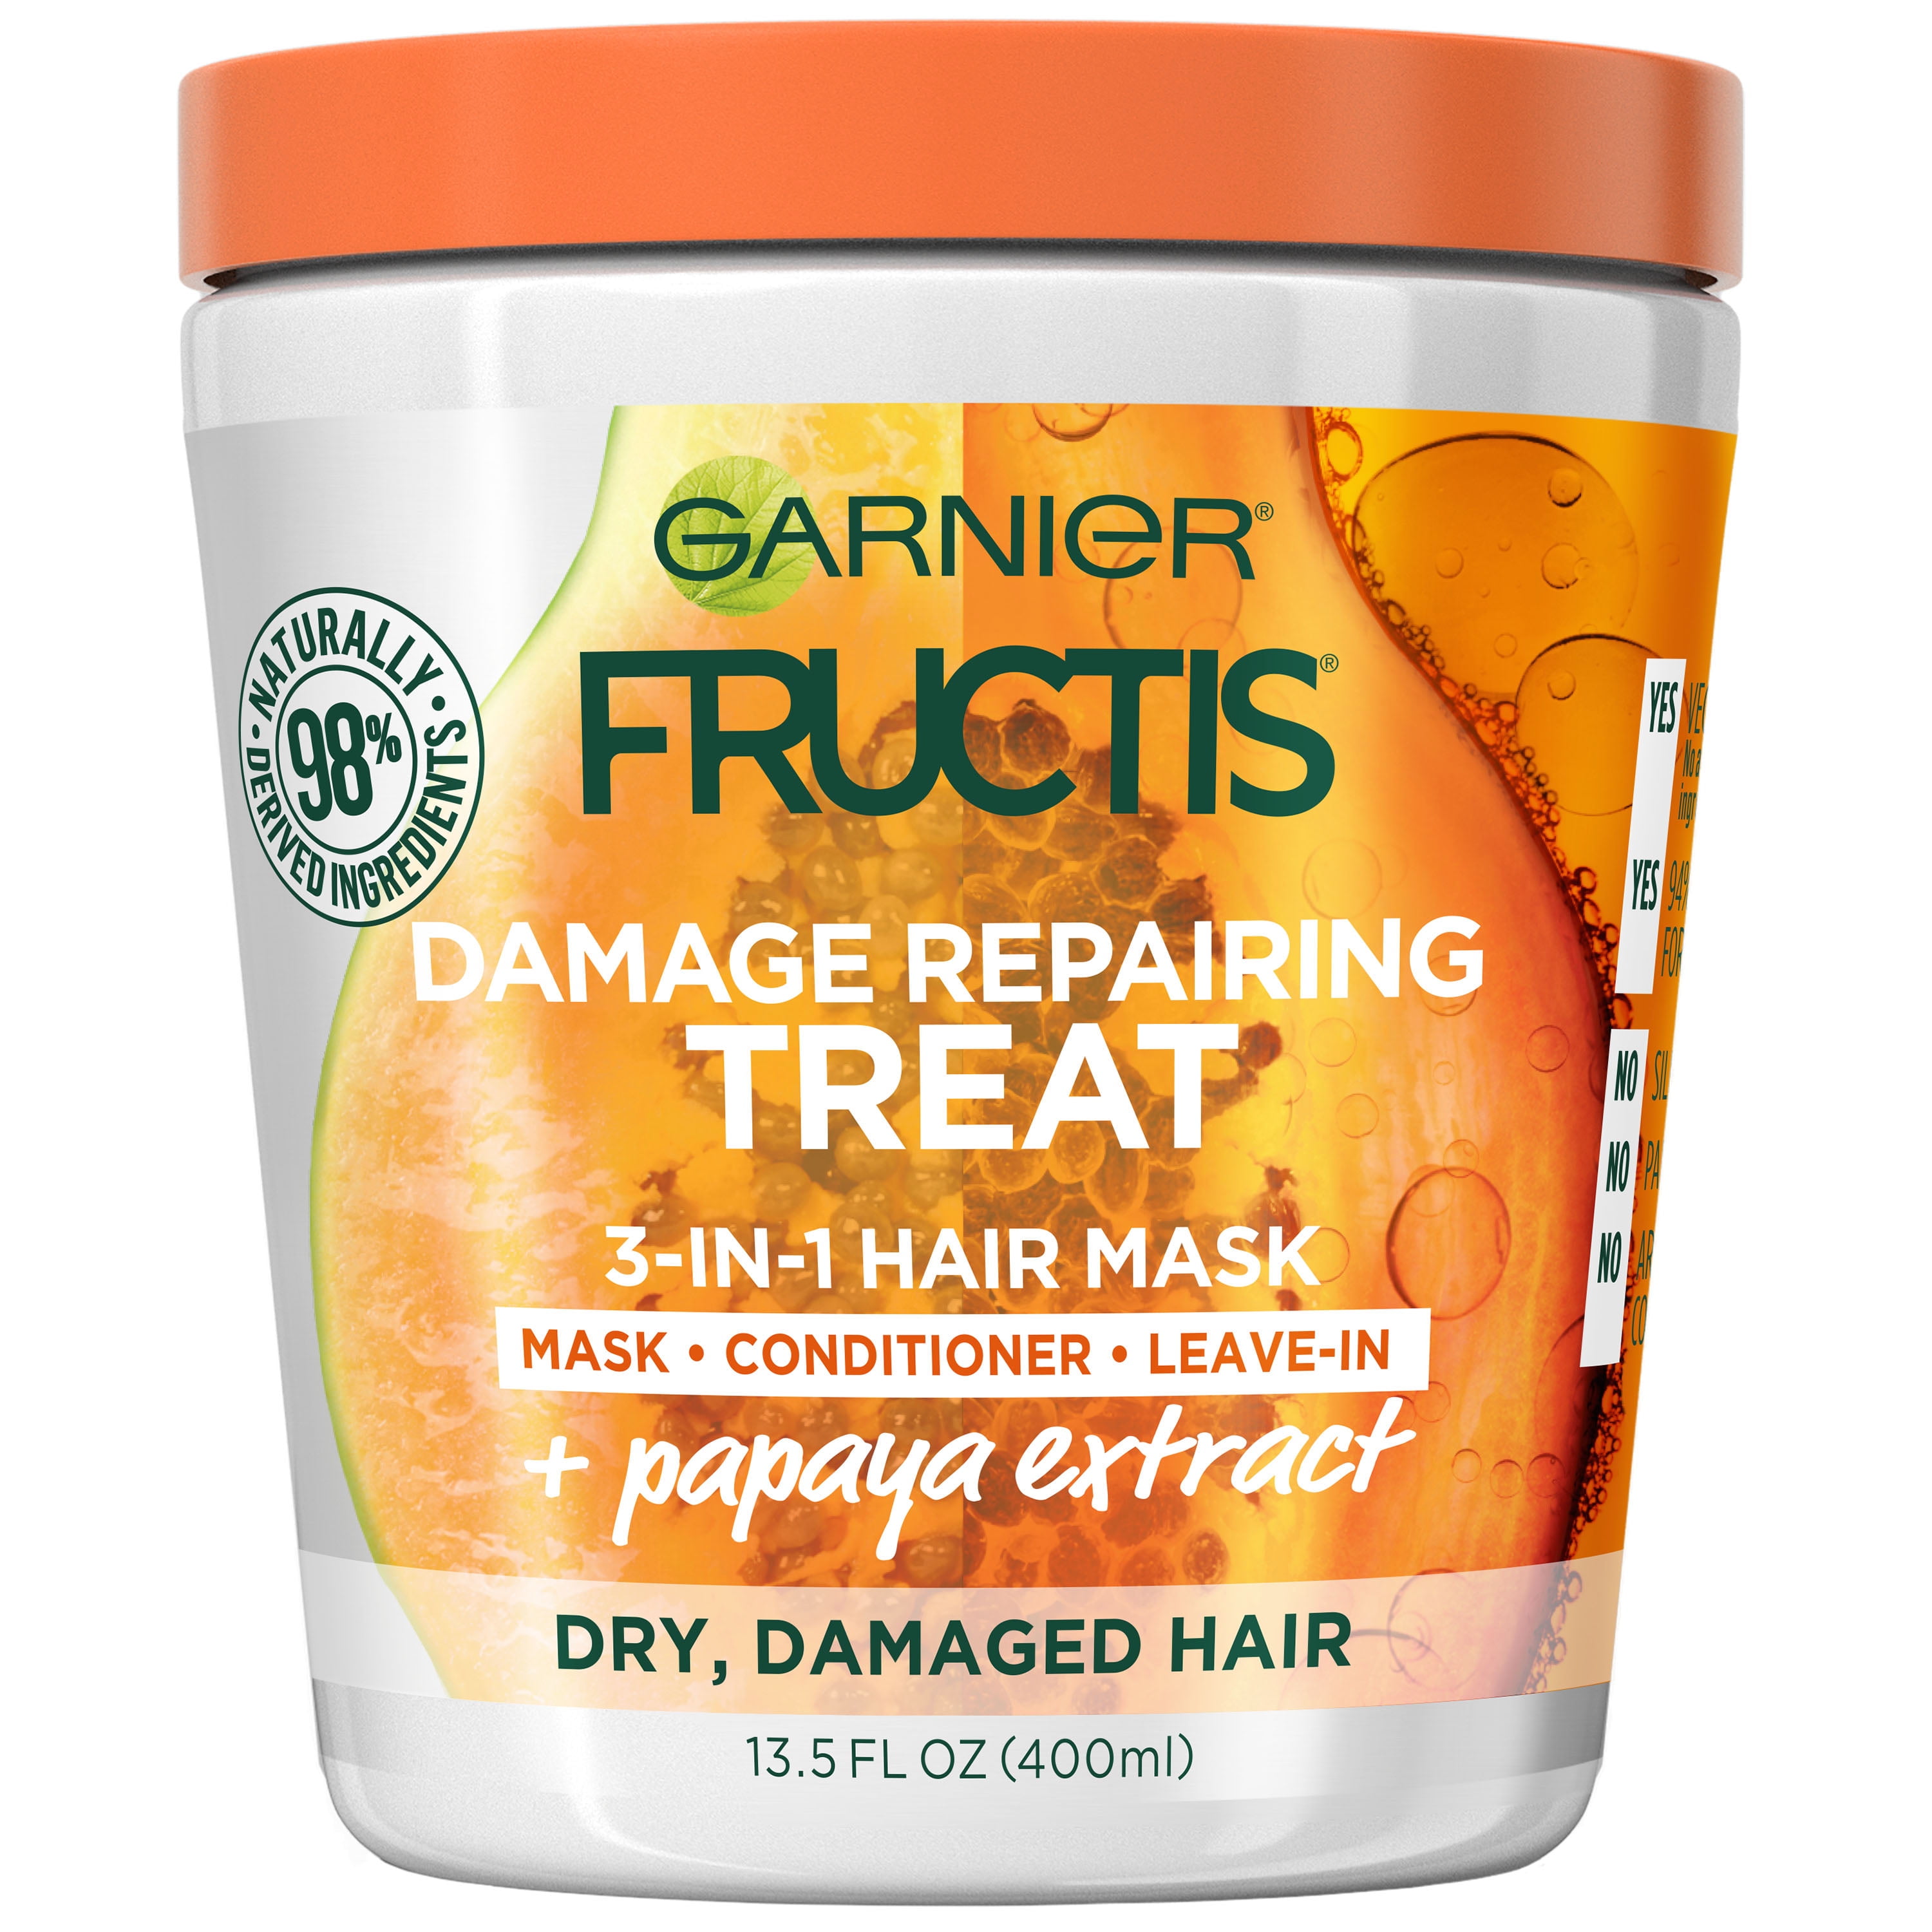 fred acceleration bede Garnier Fructis Damage Repairing Treat 3 in 1 Hair Mask with Papaya  Extract, 13.5 fl oz - Walmart.com